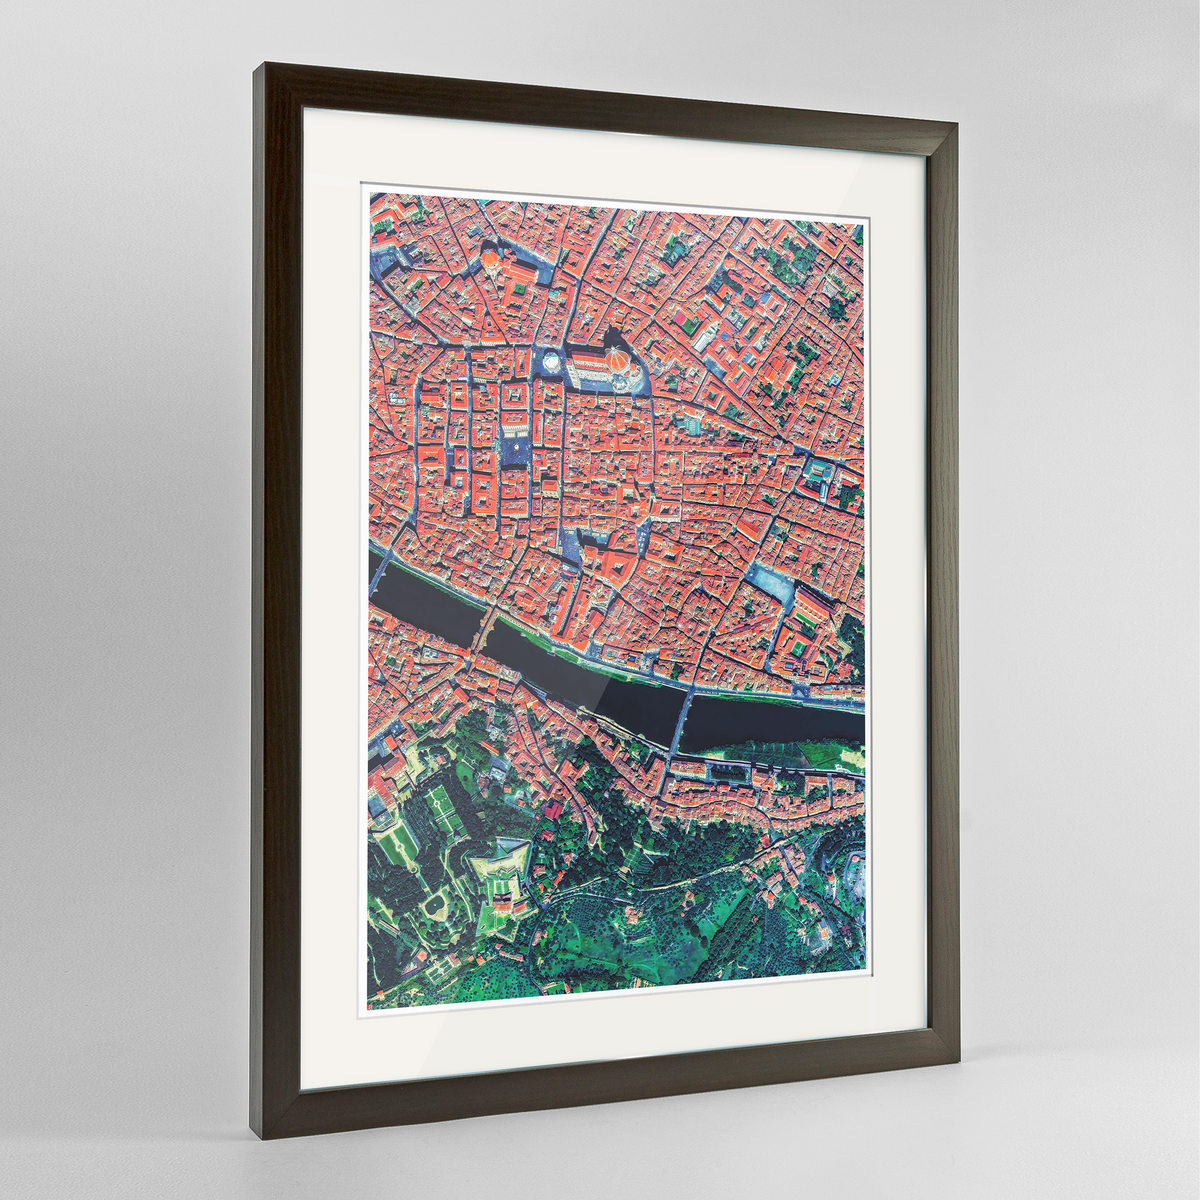 Florence Earth Photography Art Print - Framed